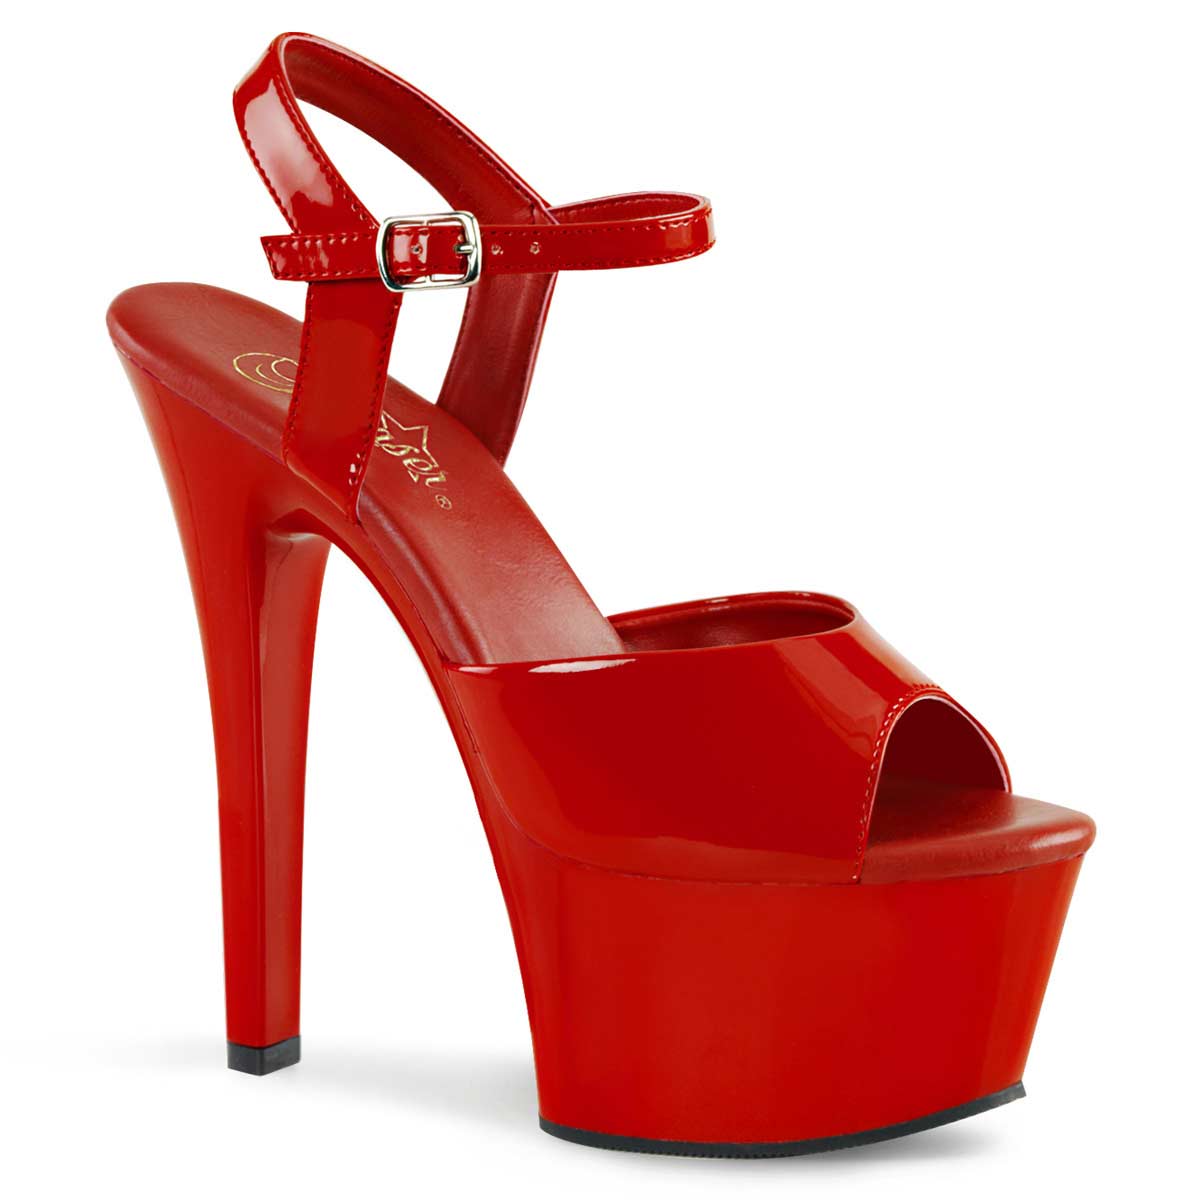 Pleaser ASPIRE-609 - Red Patent Red in Sexy Heels & Platforms - $51.95